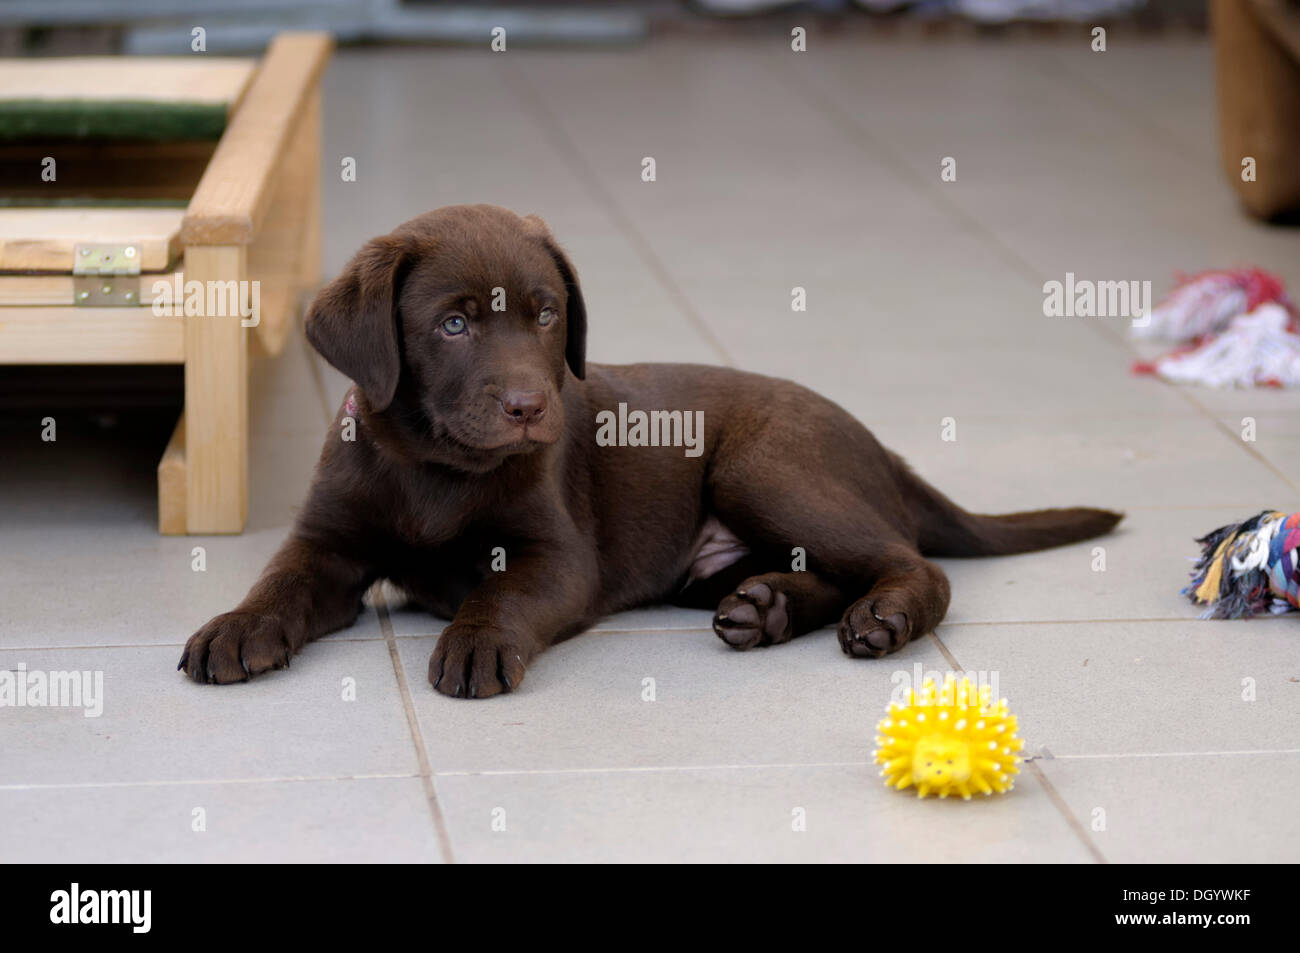 Brown Labrador Retriever, puppy lying on tiles Stock Photo